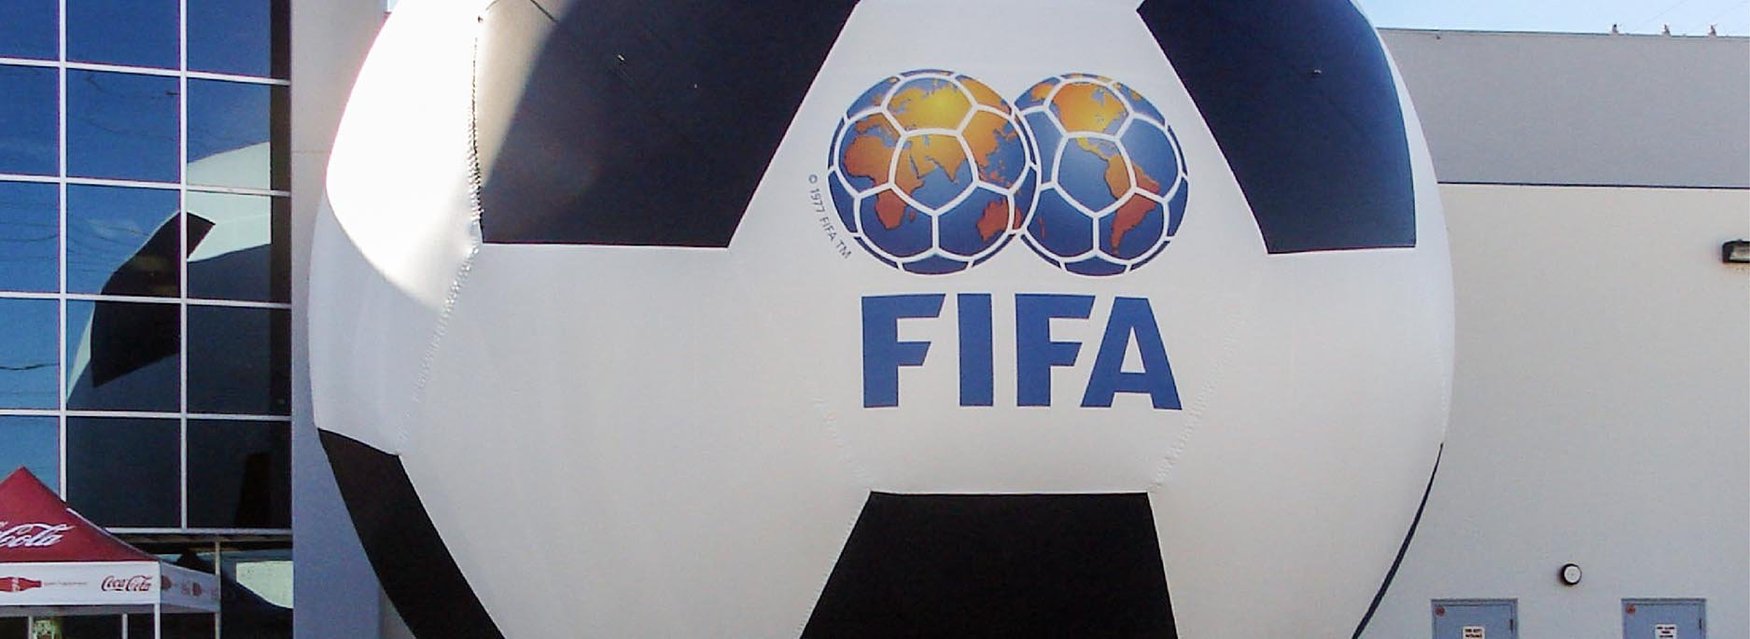 Inflatable FIFA soccer ball replica